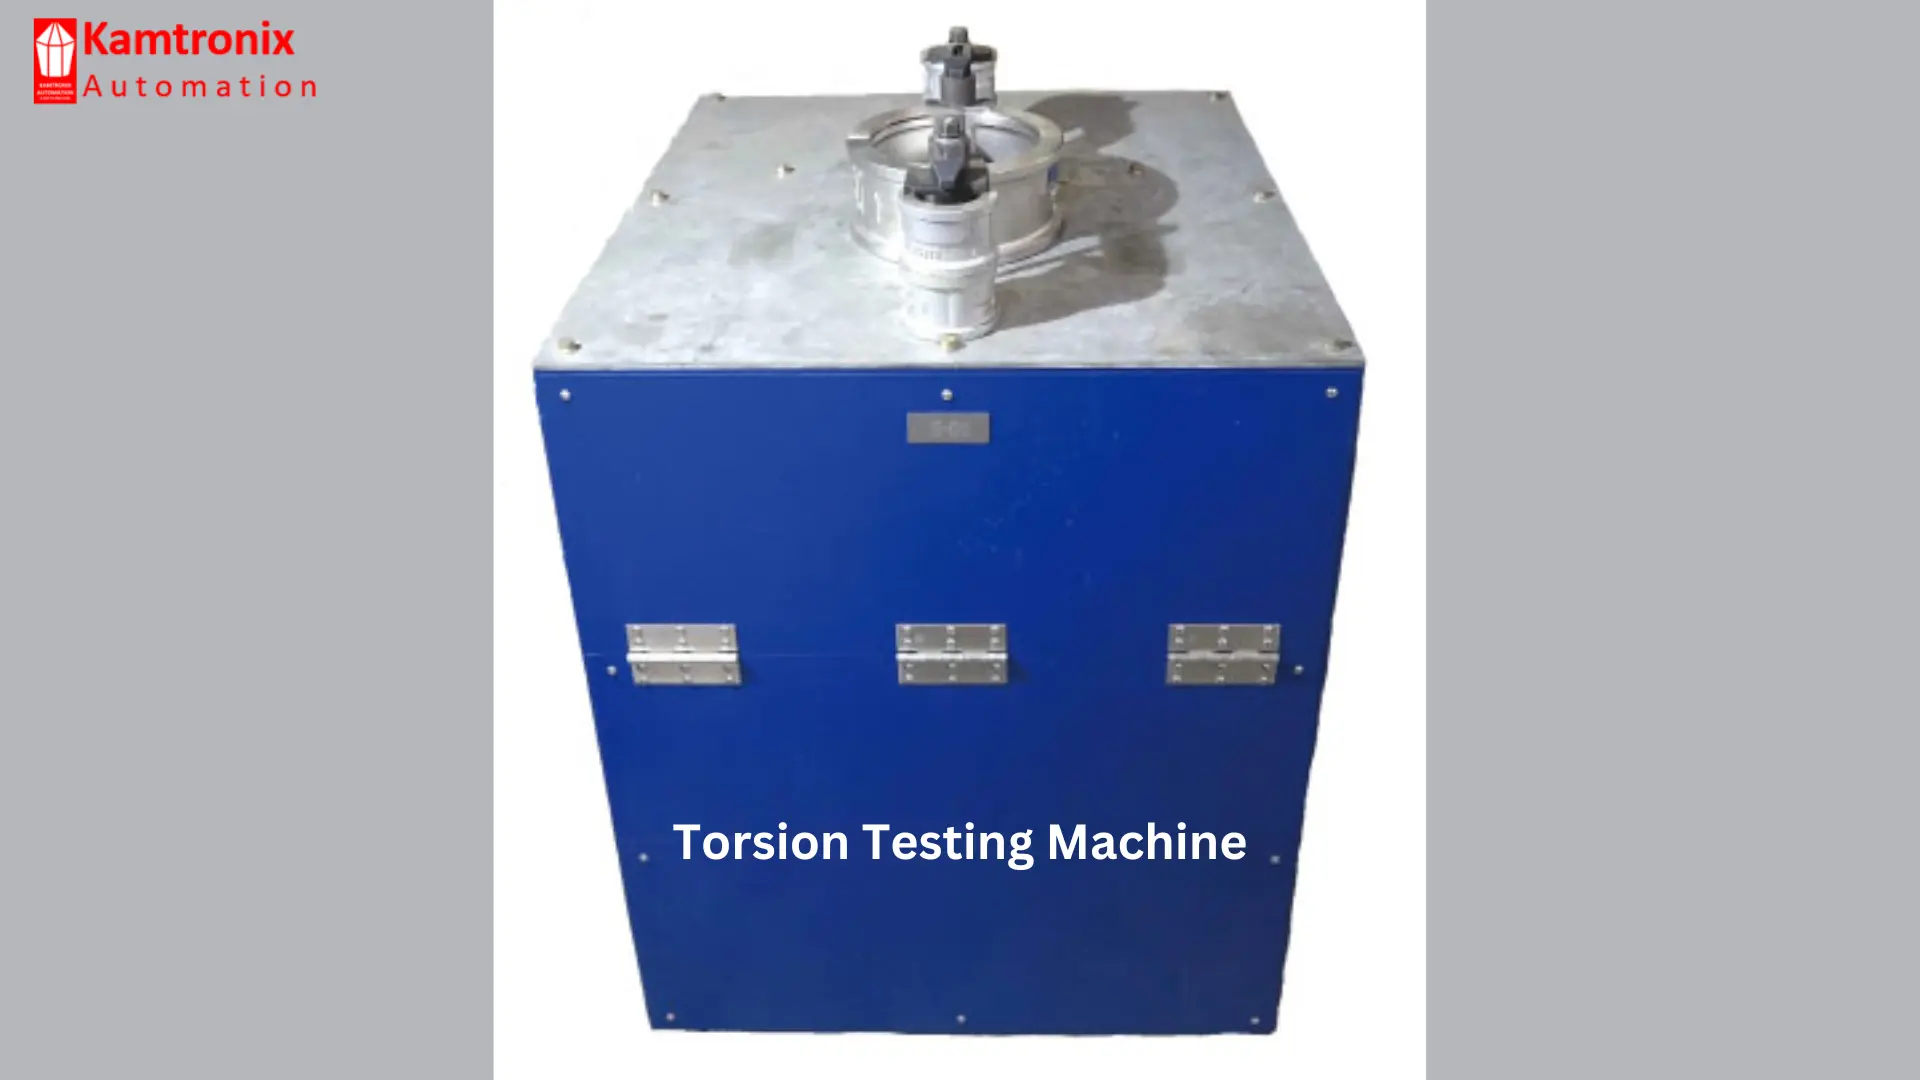 Torsion testing machine